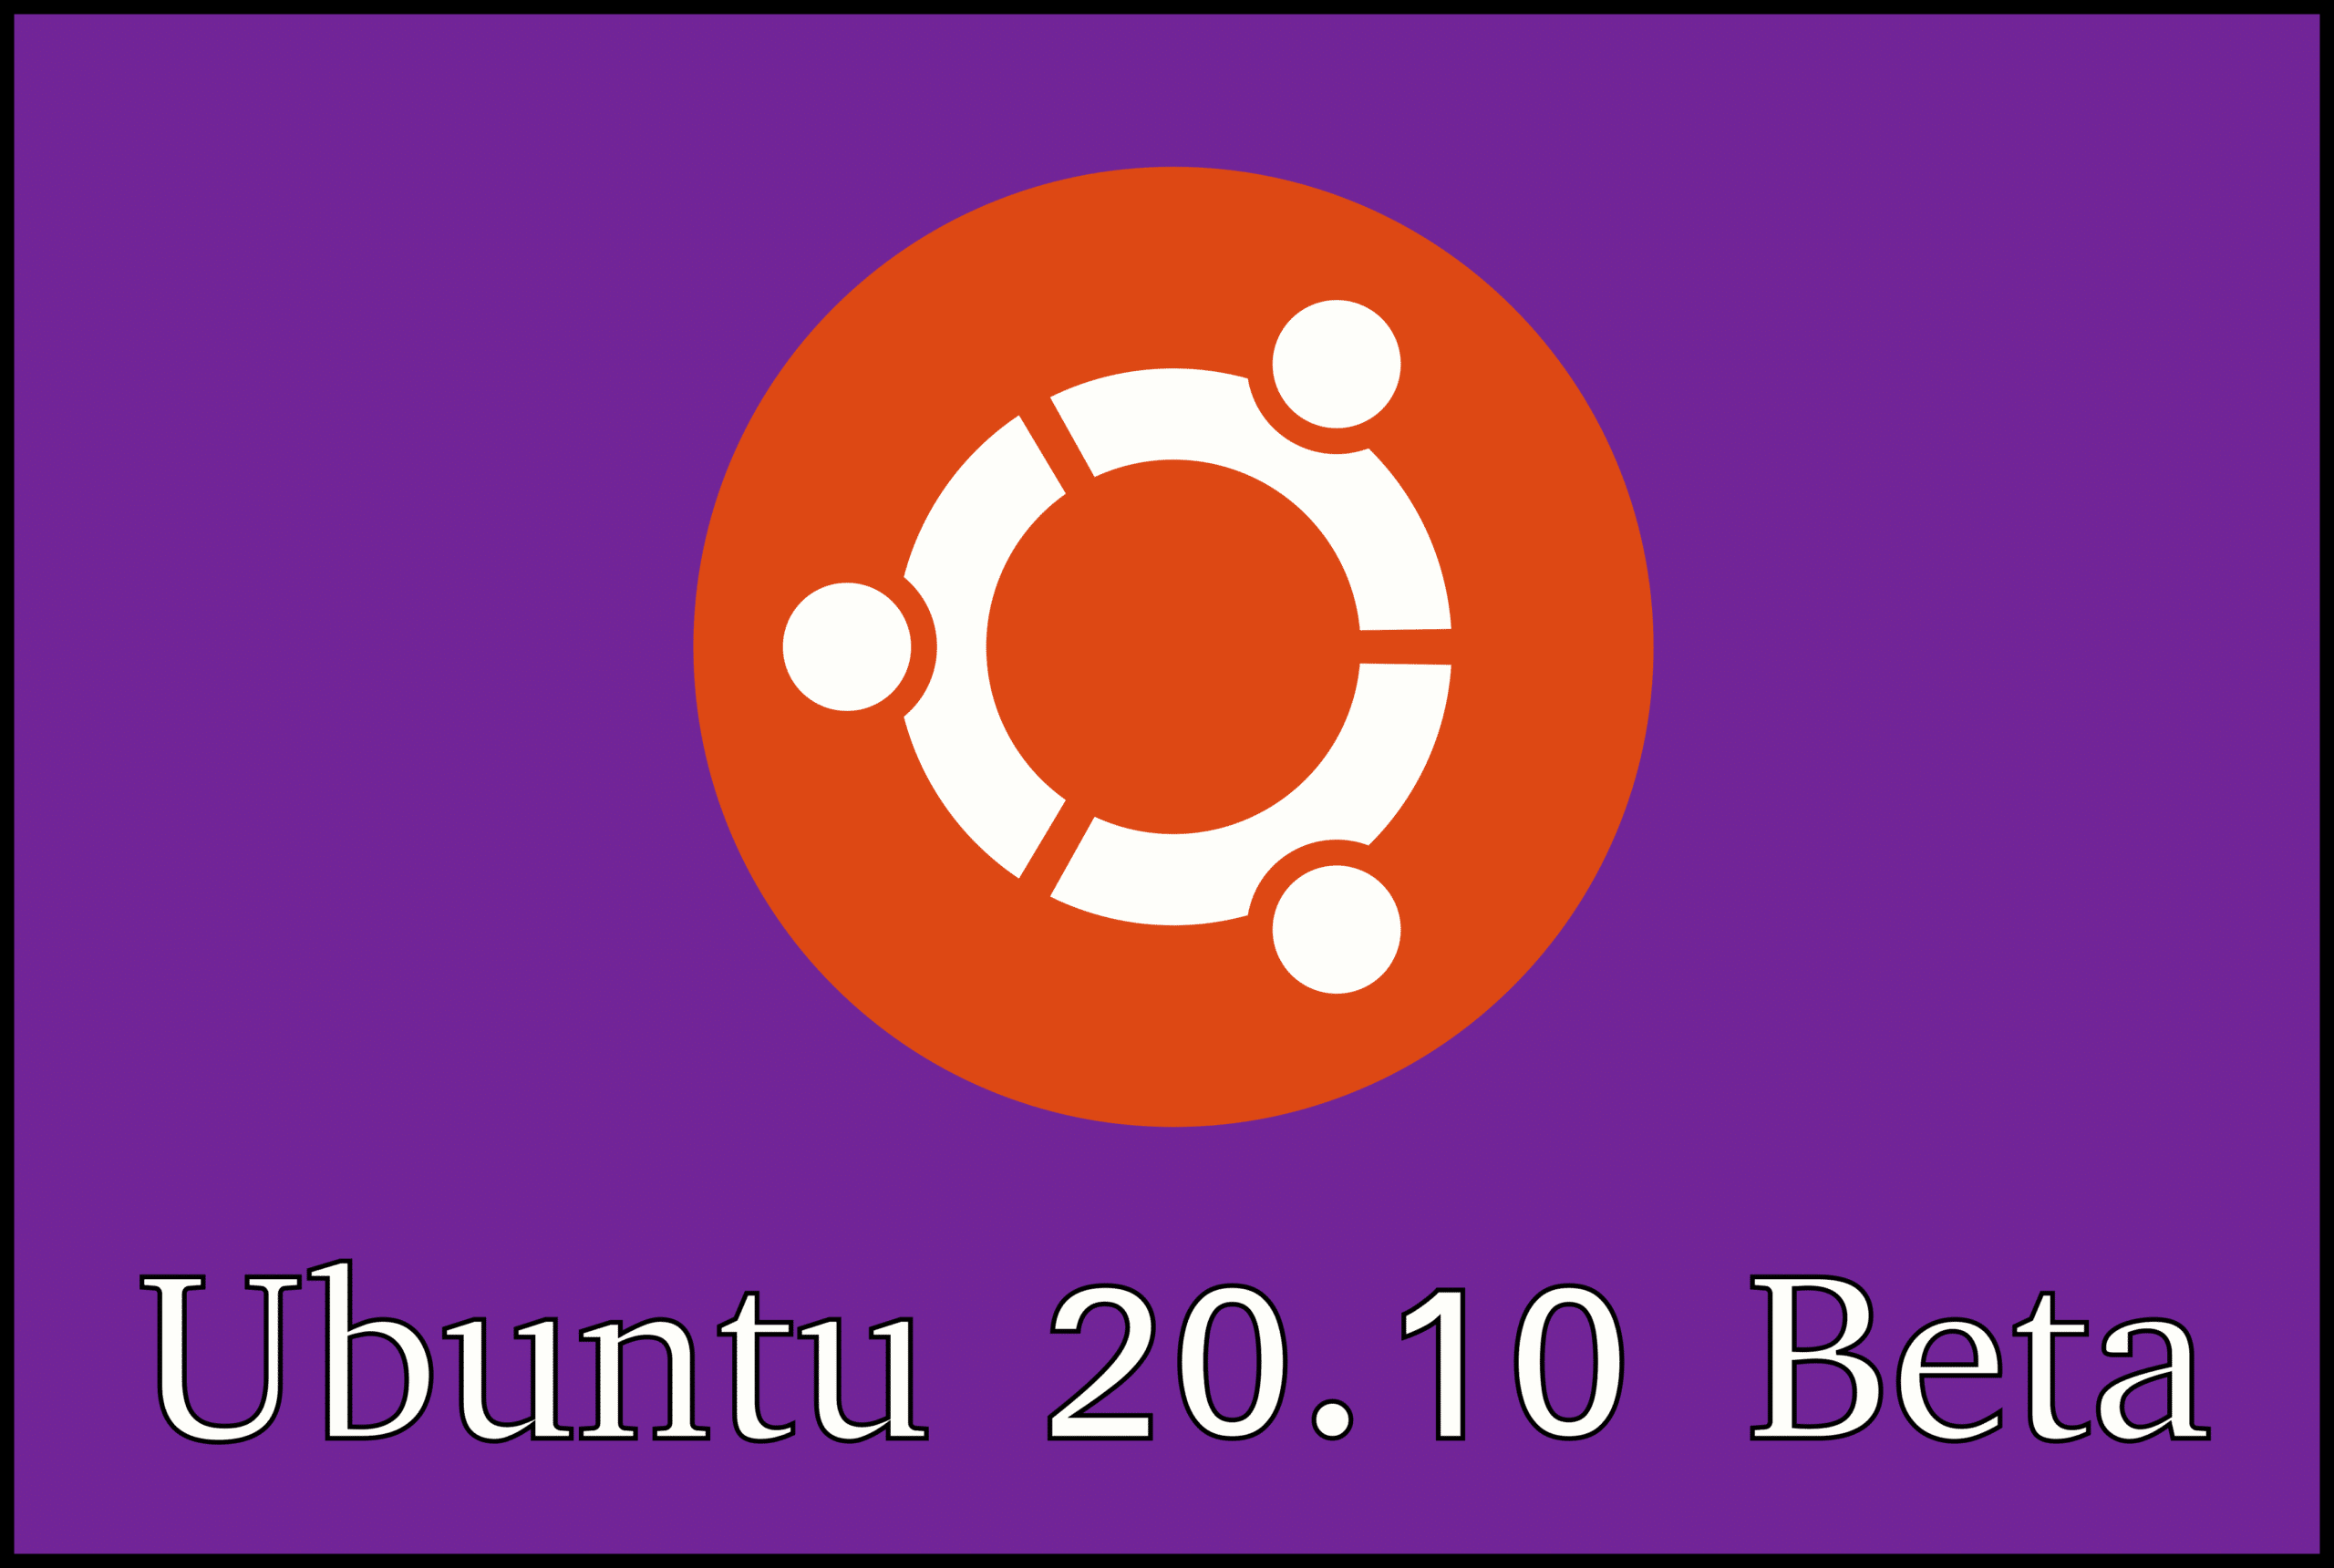 Ubuntu 20.10 Beta já está disponível para download